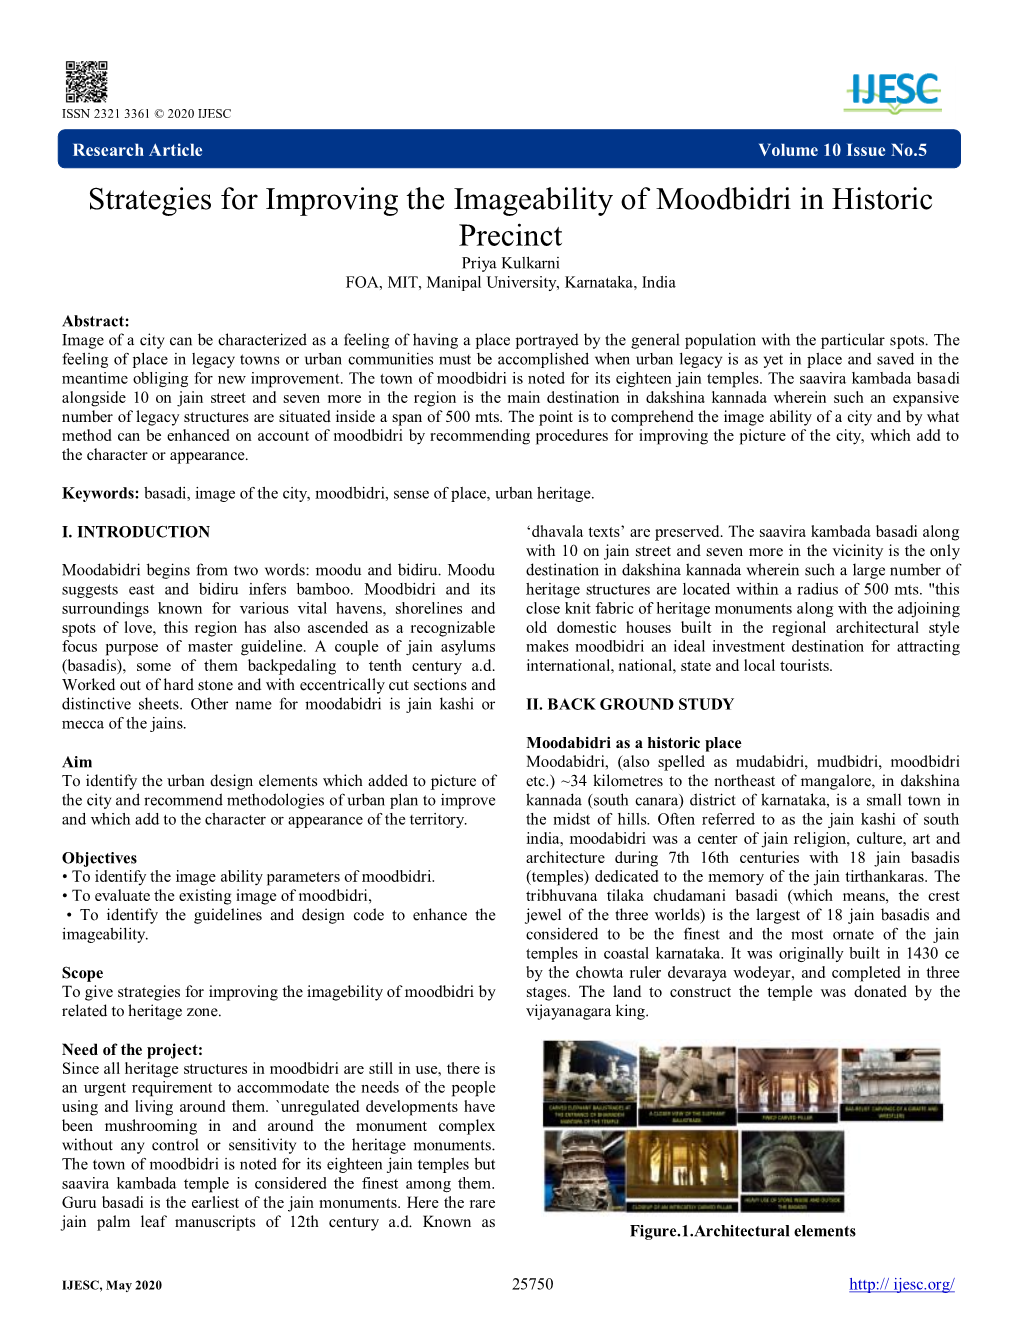 Strategies for Improving the Imageability of Moodbidri in Historic Precinct Priya Kulkarni FOA, MIT, Manipal University, Karnataka, India